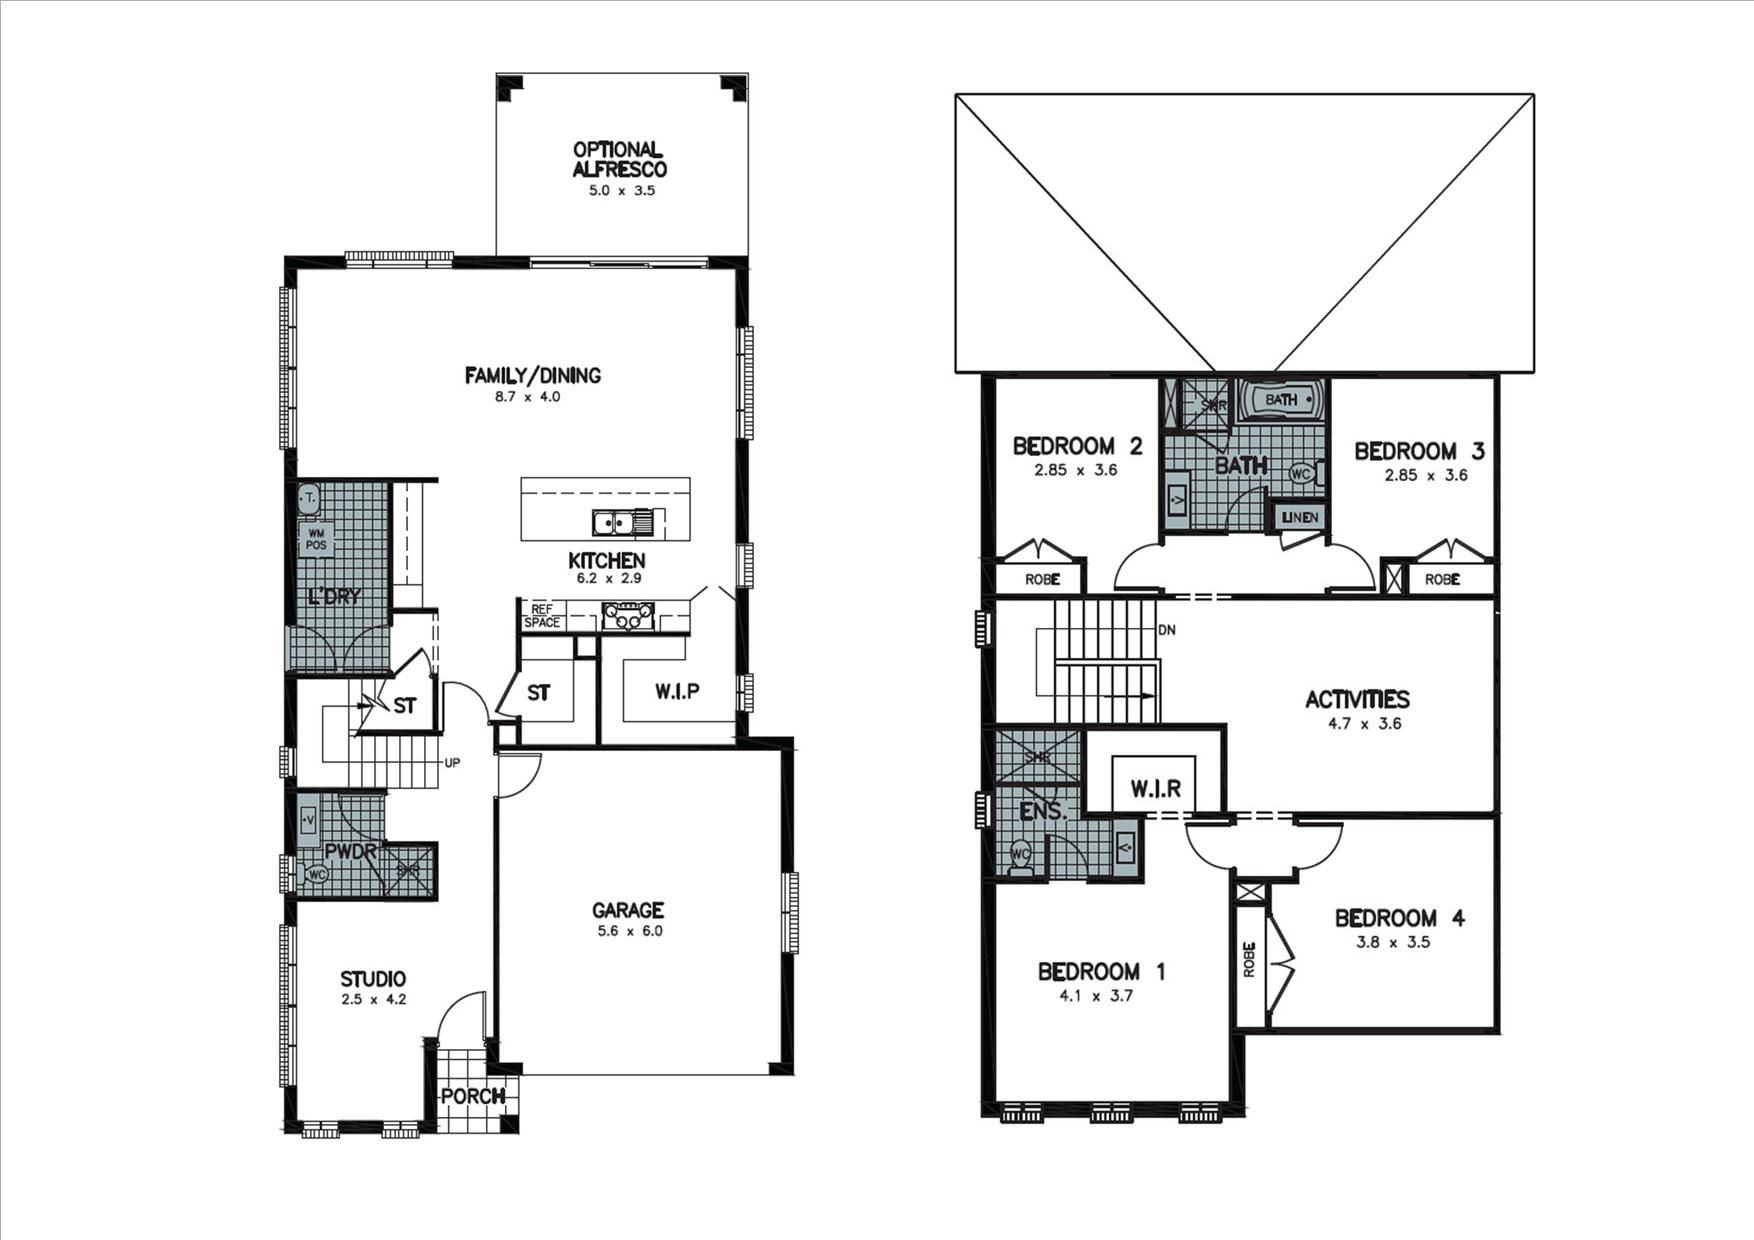 Lydden Allworth Homes Ten alternate floor plans